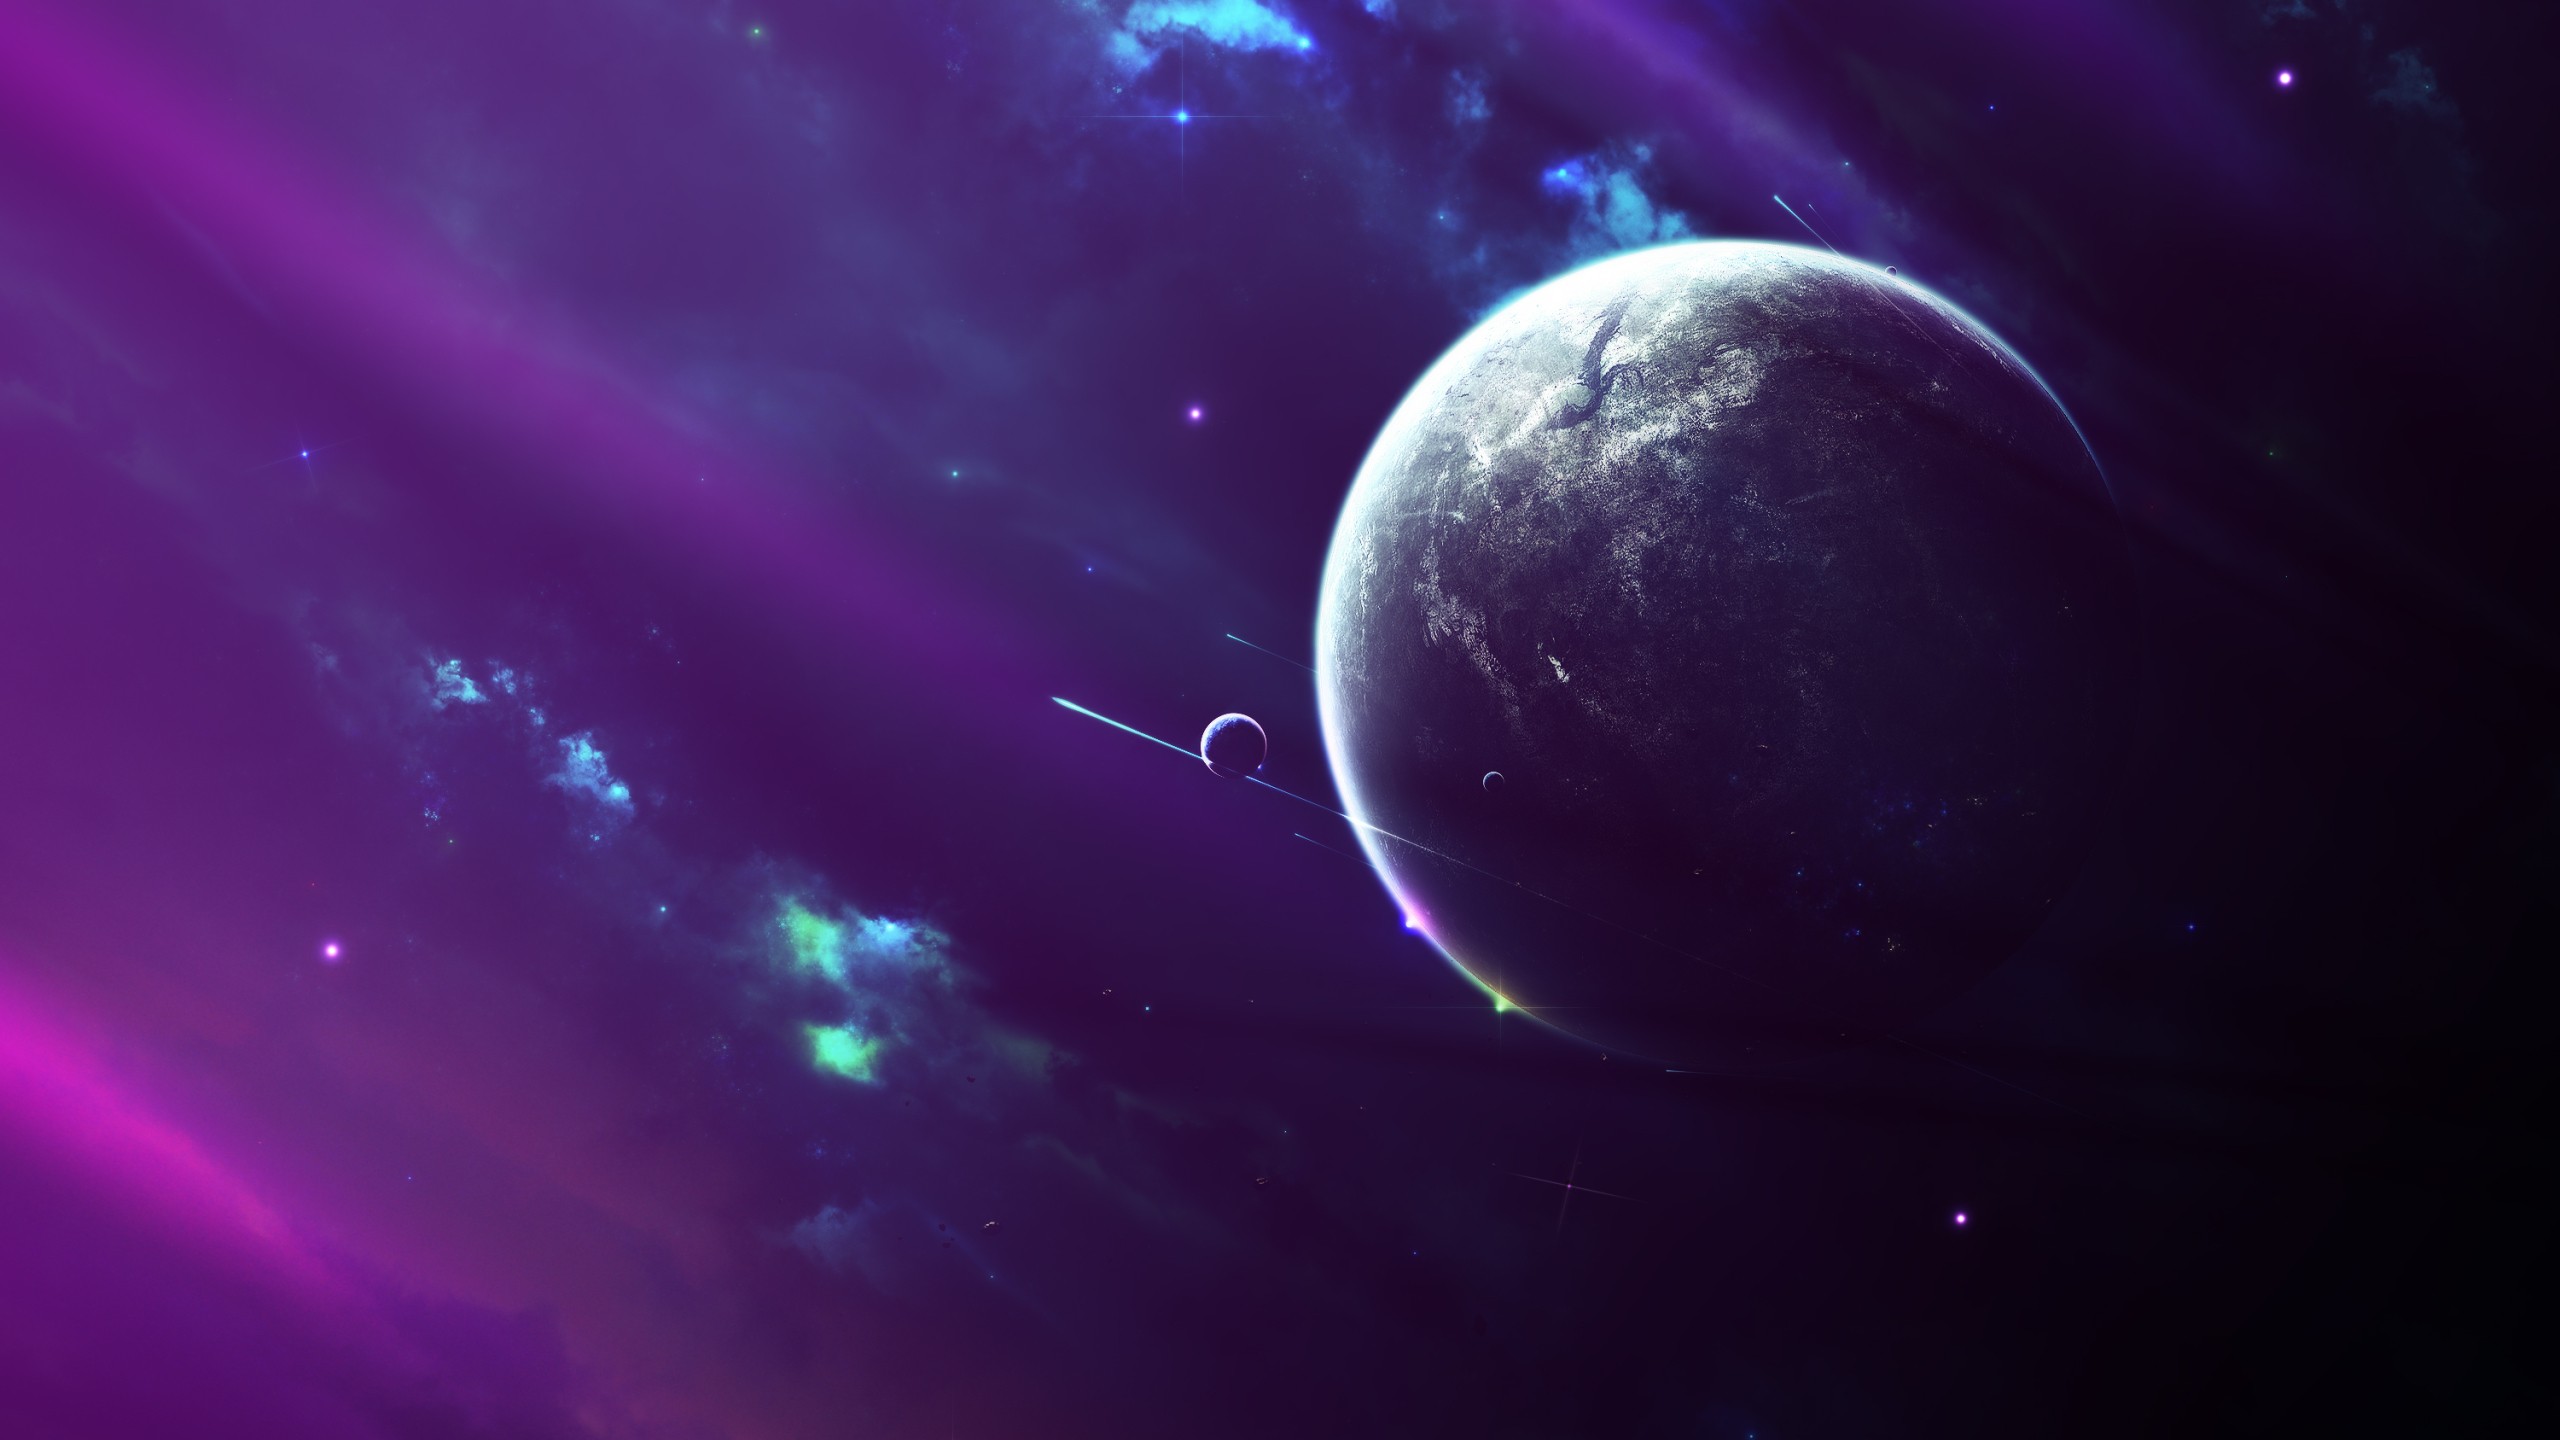 General 2560x1440 space Moon nebula planet fantasy art purple background purple digital art